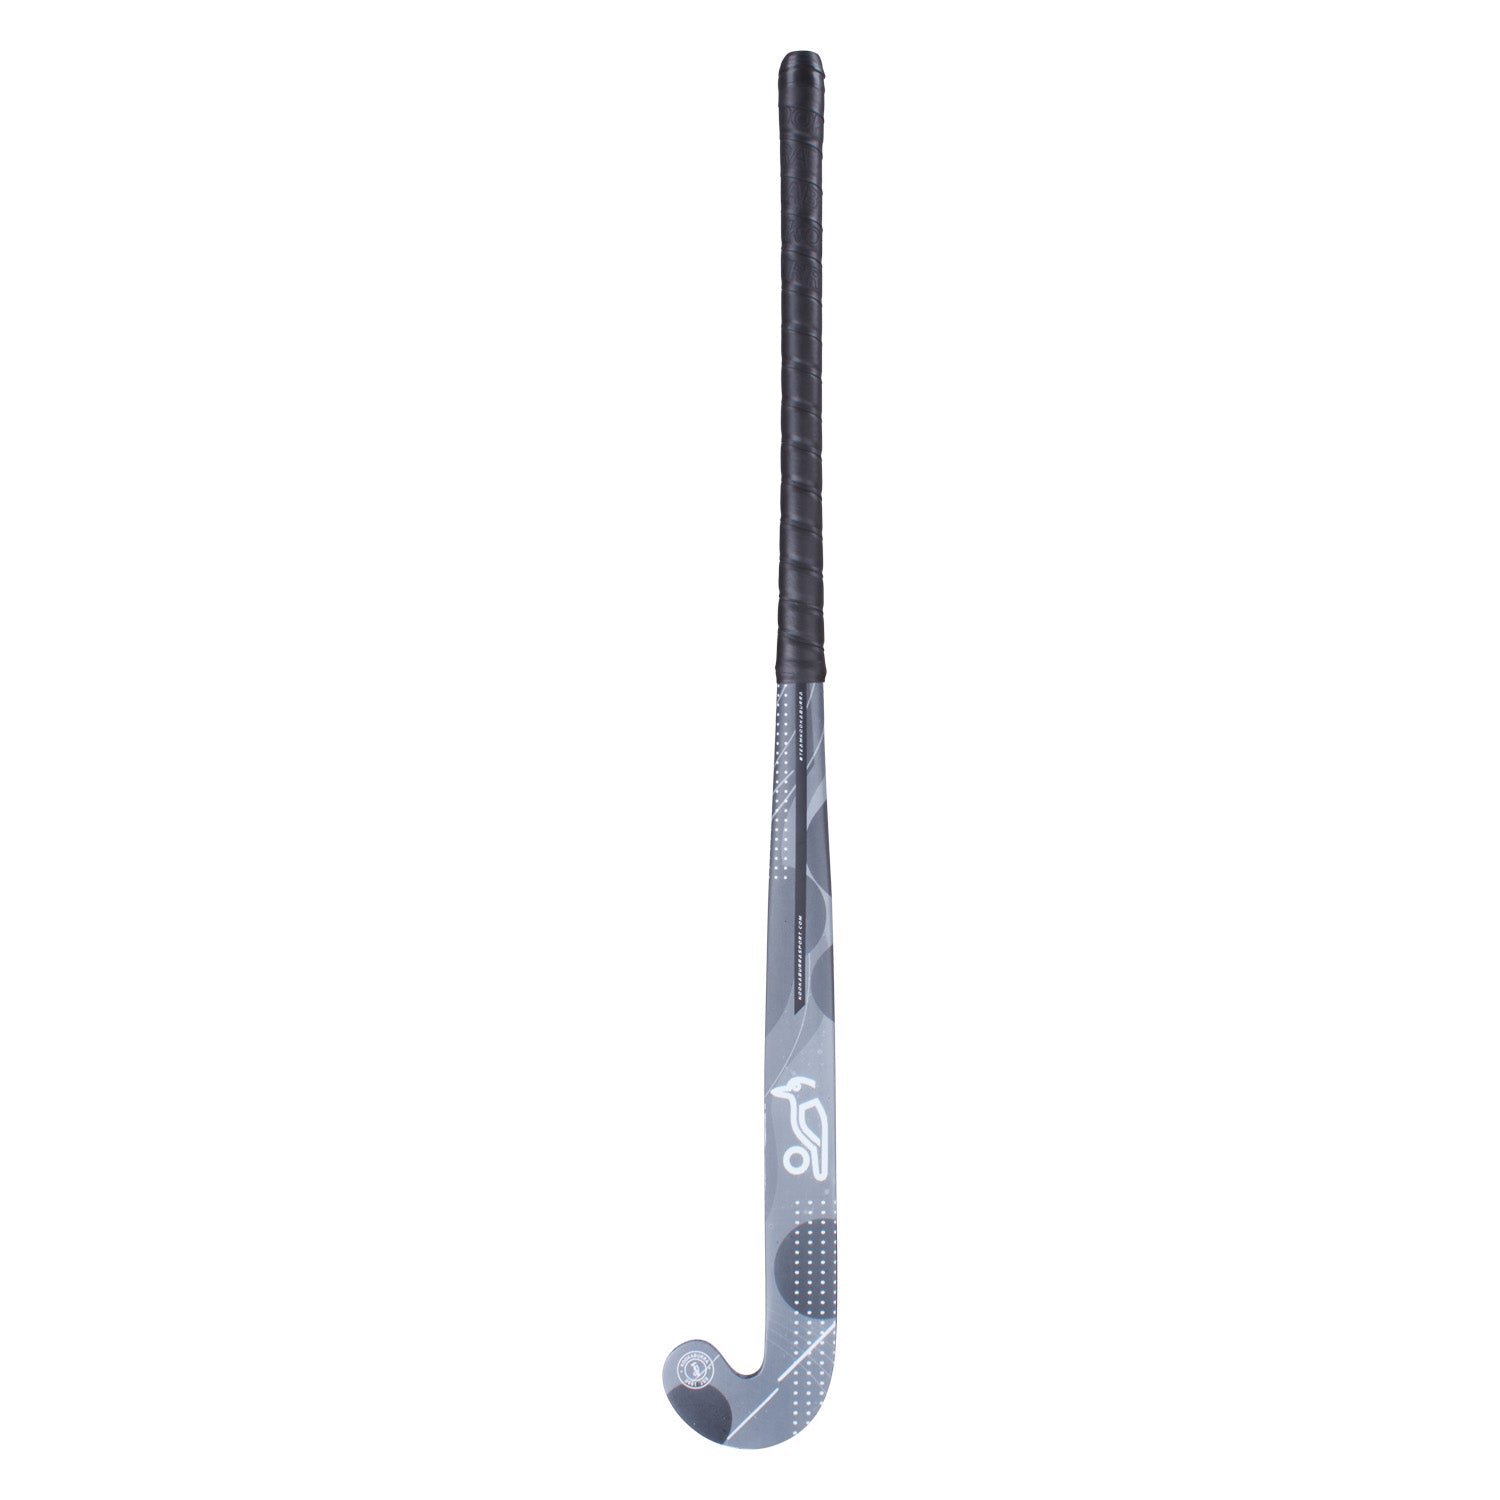 Kookaburra Cozmos M-Bow 35 Light Hockey Stick